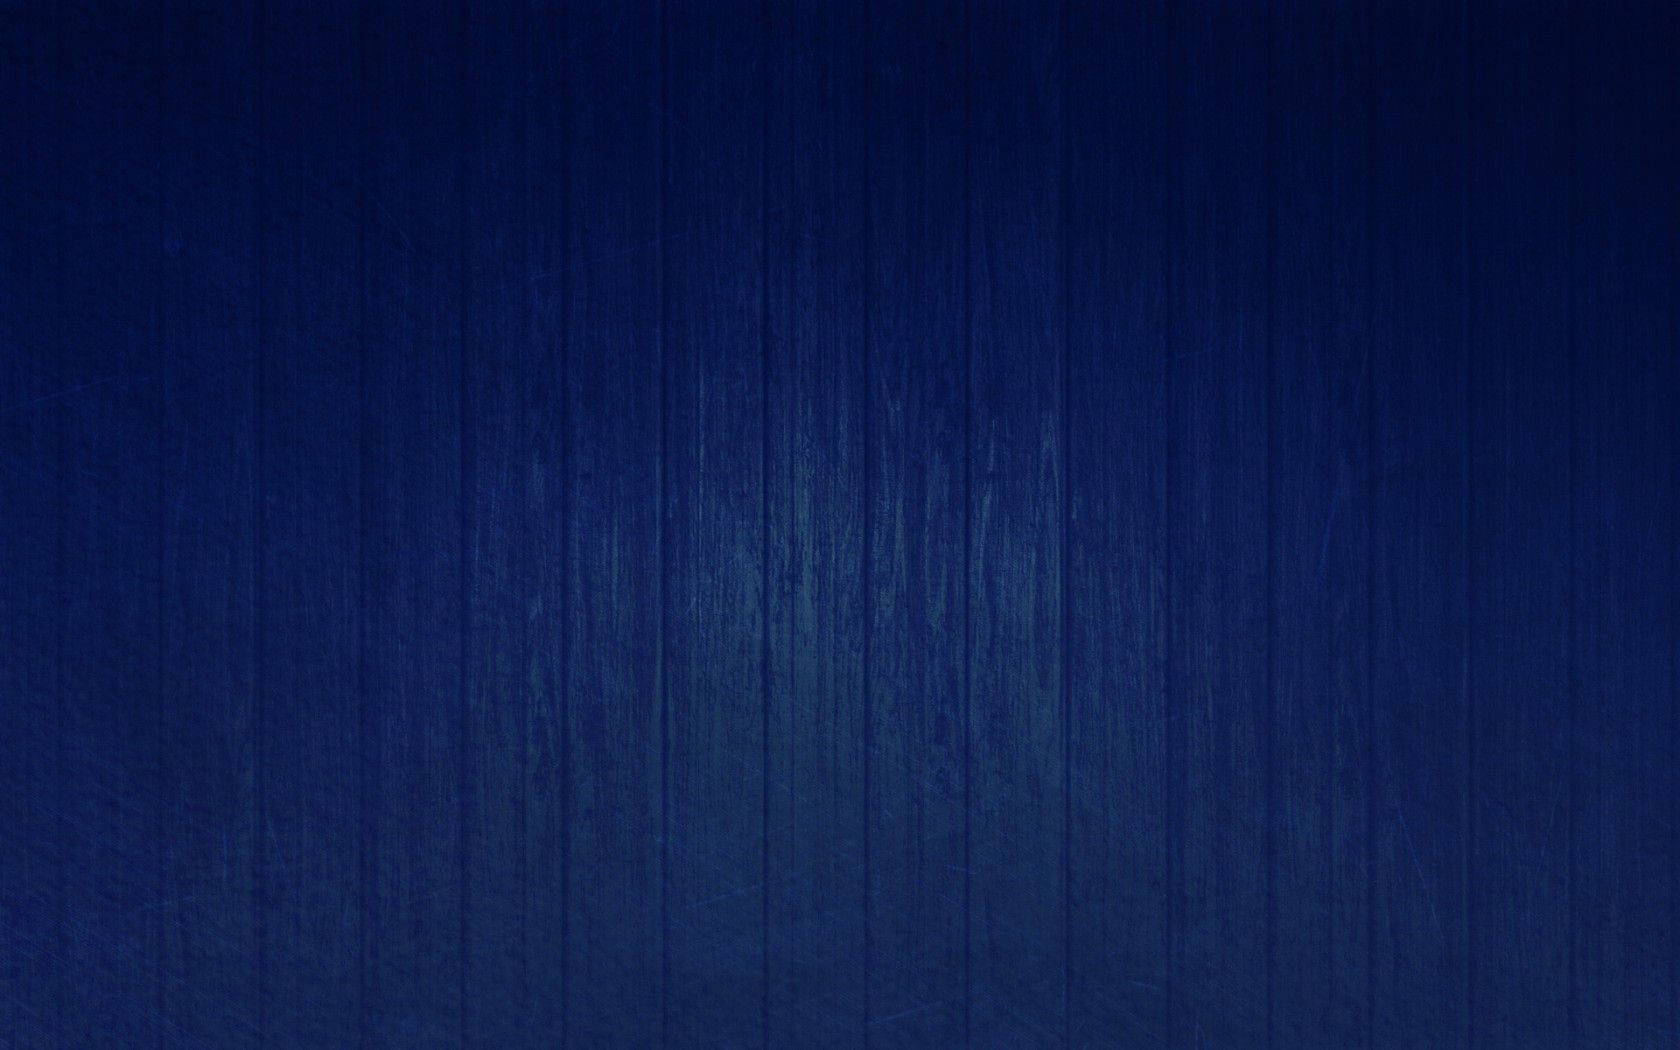 1680x1050 Blue Wallpaper 46460 1680x1050 Px Wallpaper